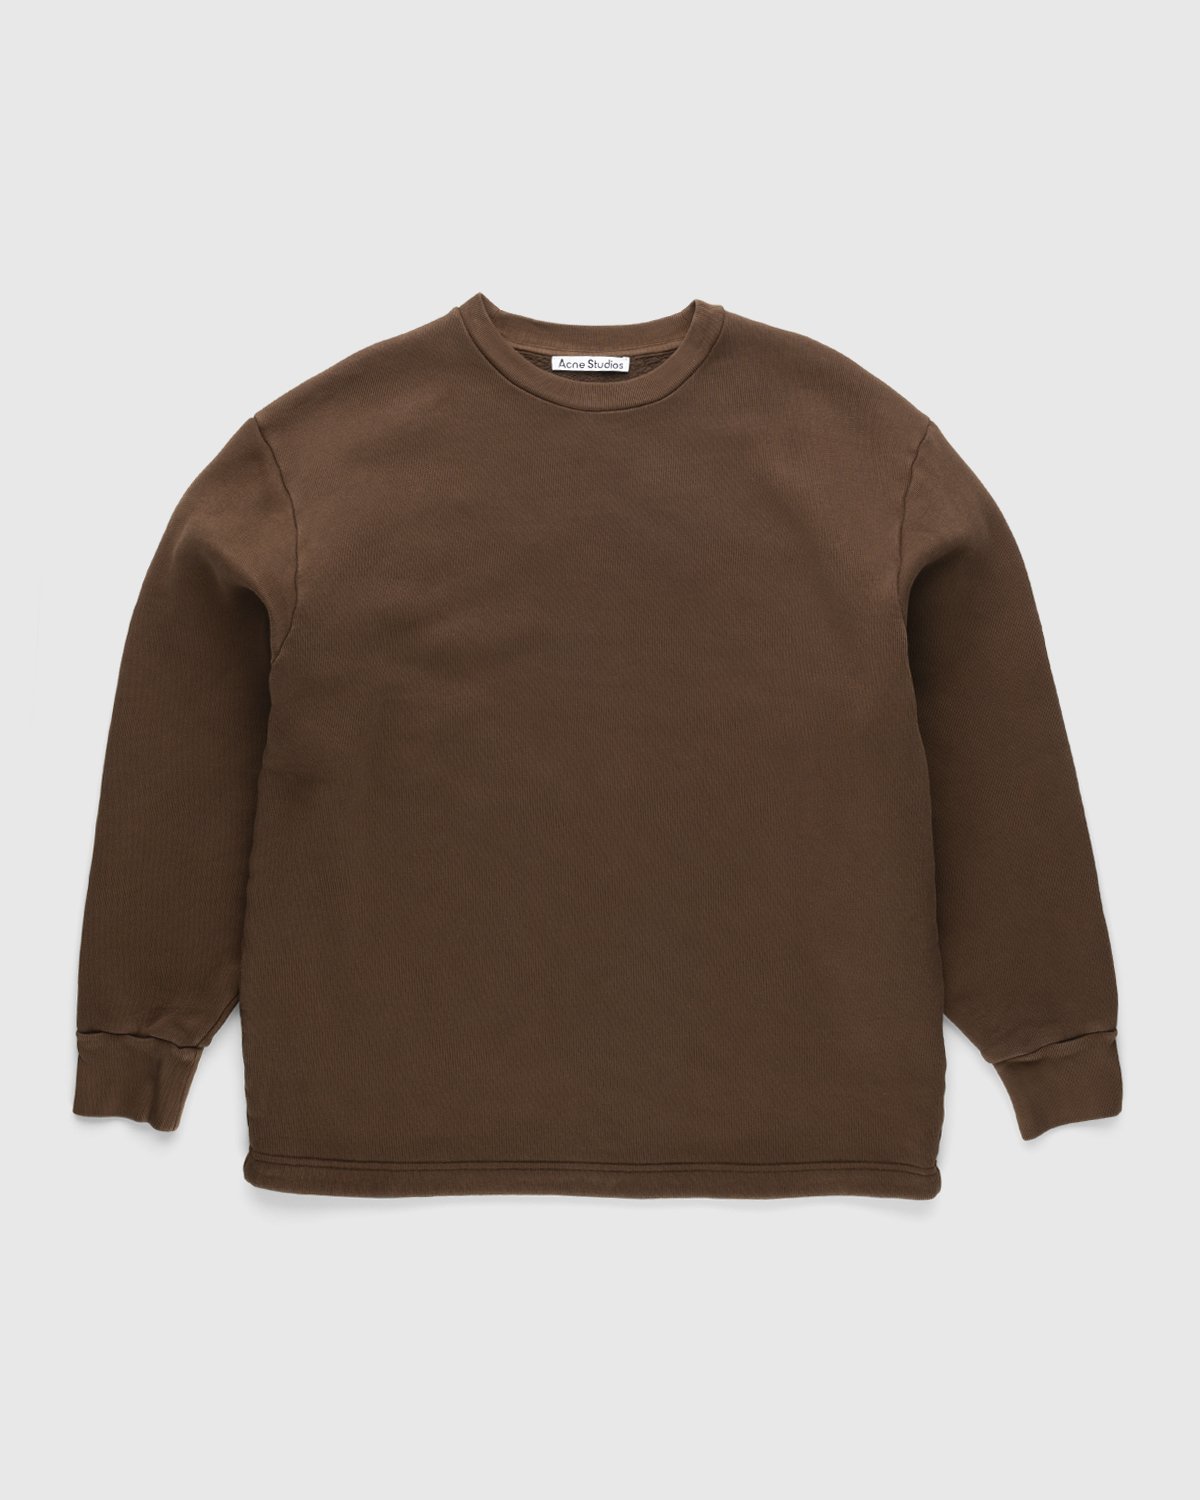 Acne Studios - Logo Sweatshirt Chocolate Brown - Clothing - Brown - Image 2